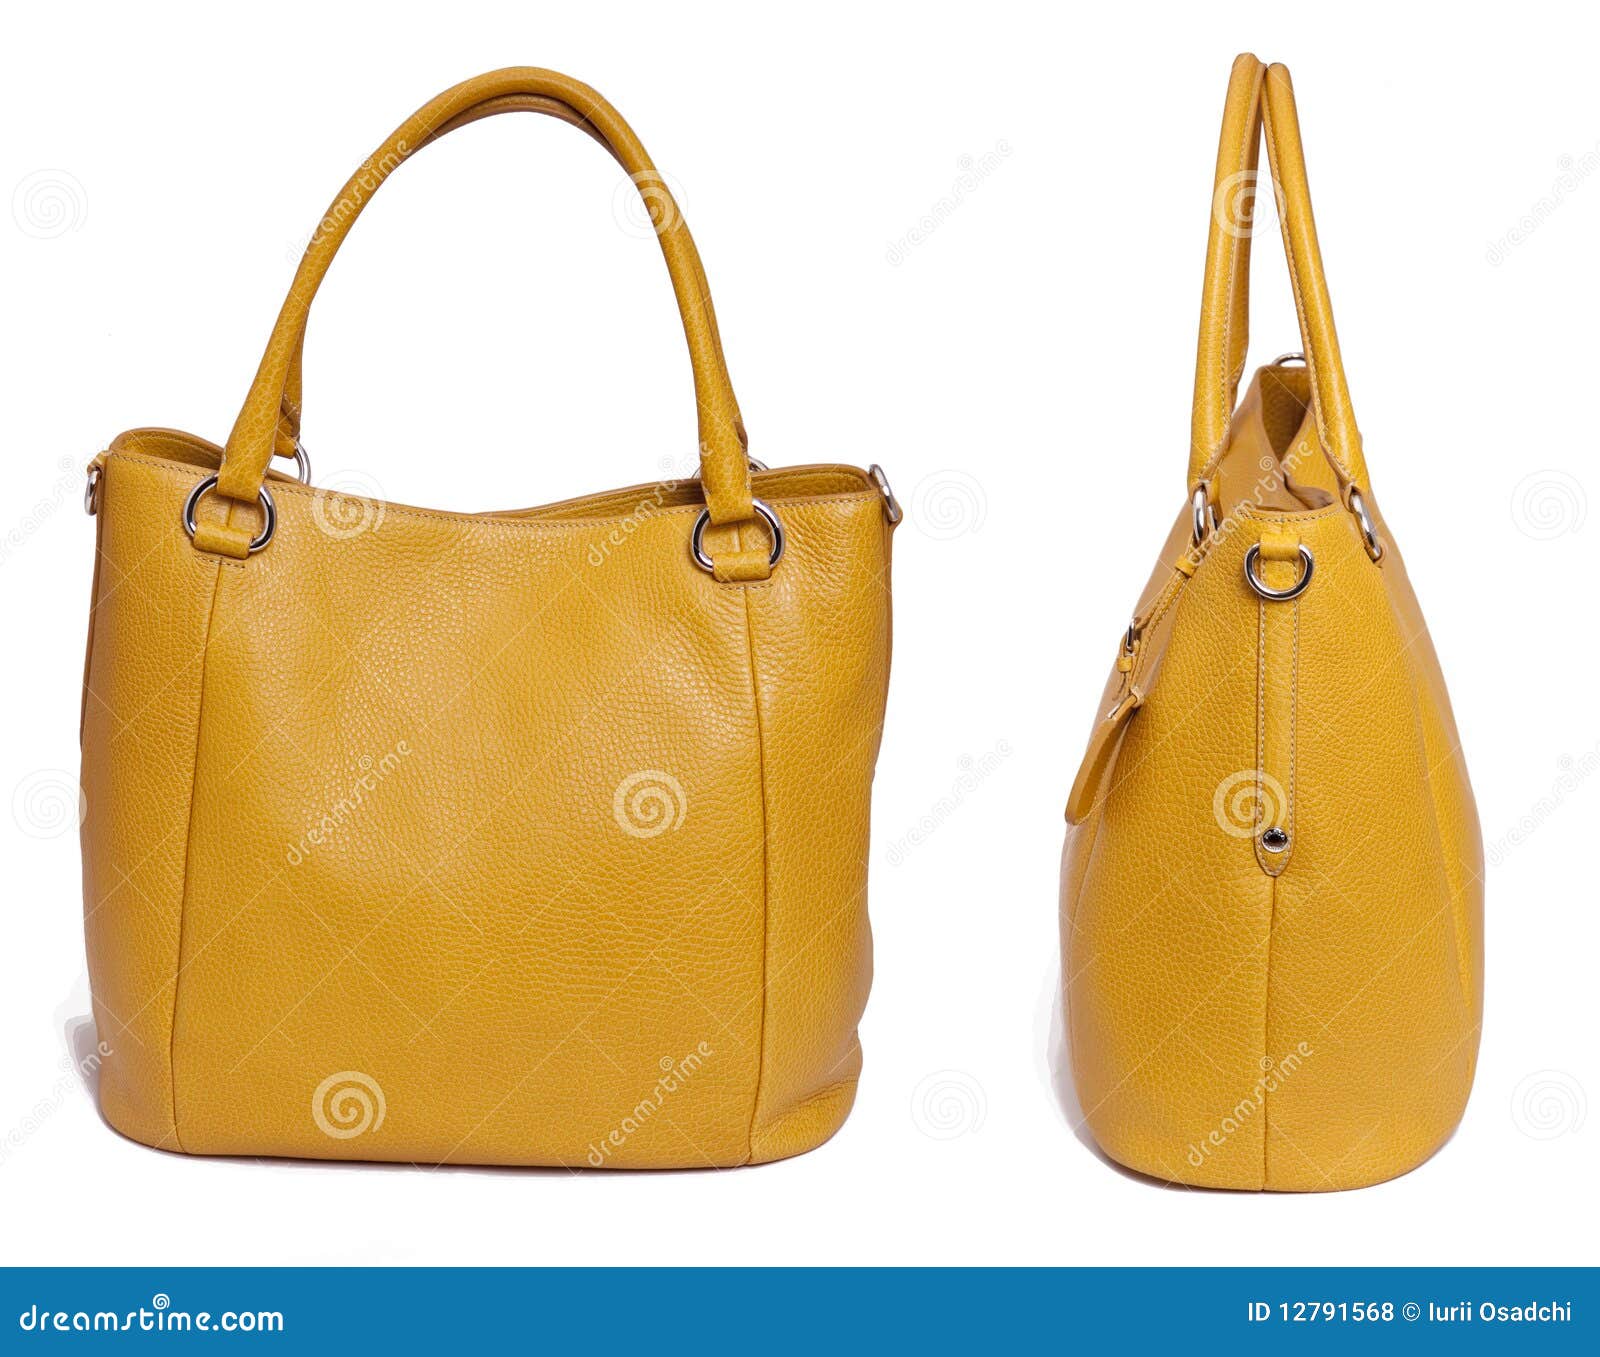 yellow-leather-woman-bag-12791568.jpg